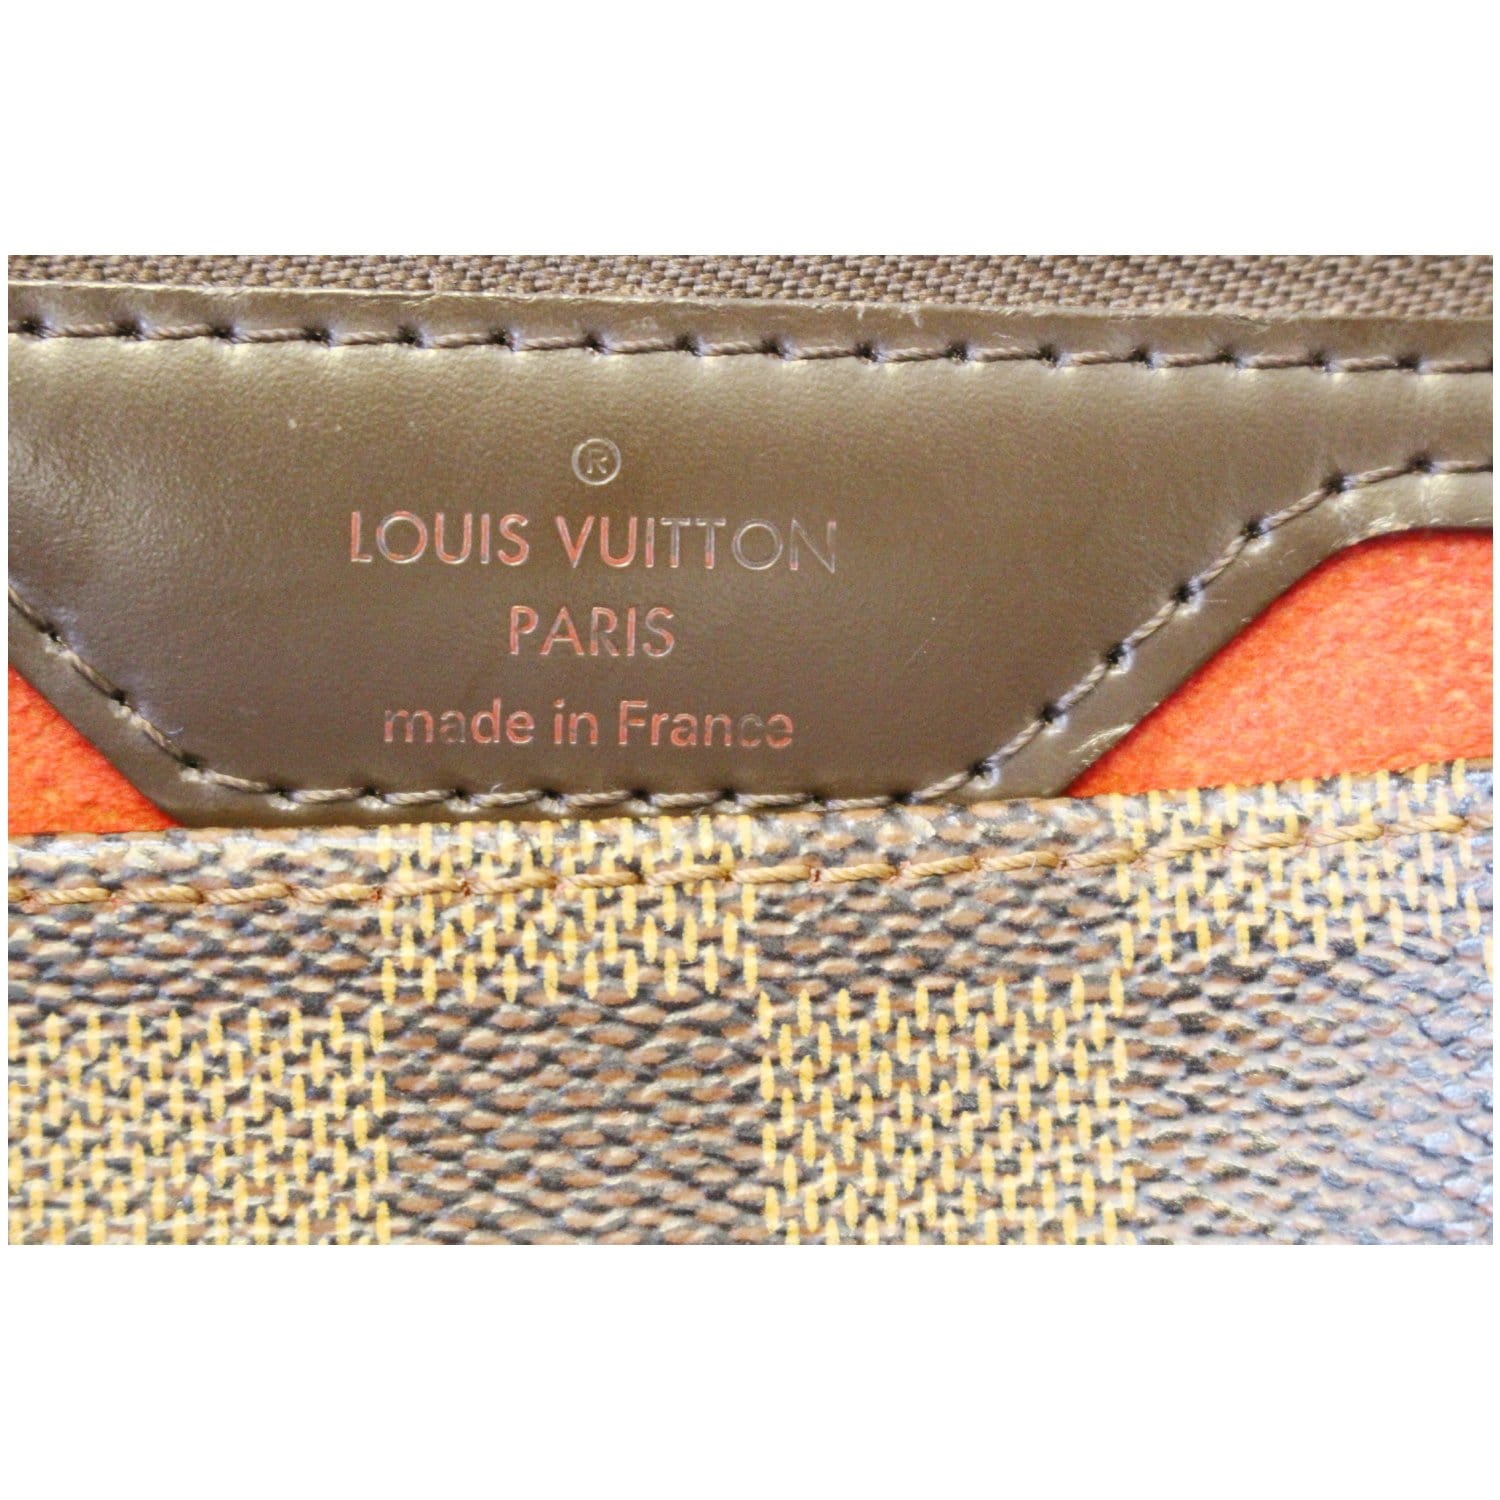 Louis Vuitton Damier Ebene Canvas Bergamo MM Bag Louis Vuitton